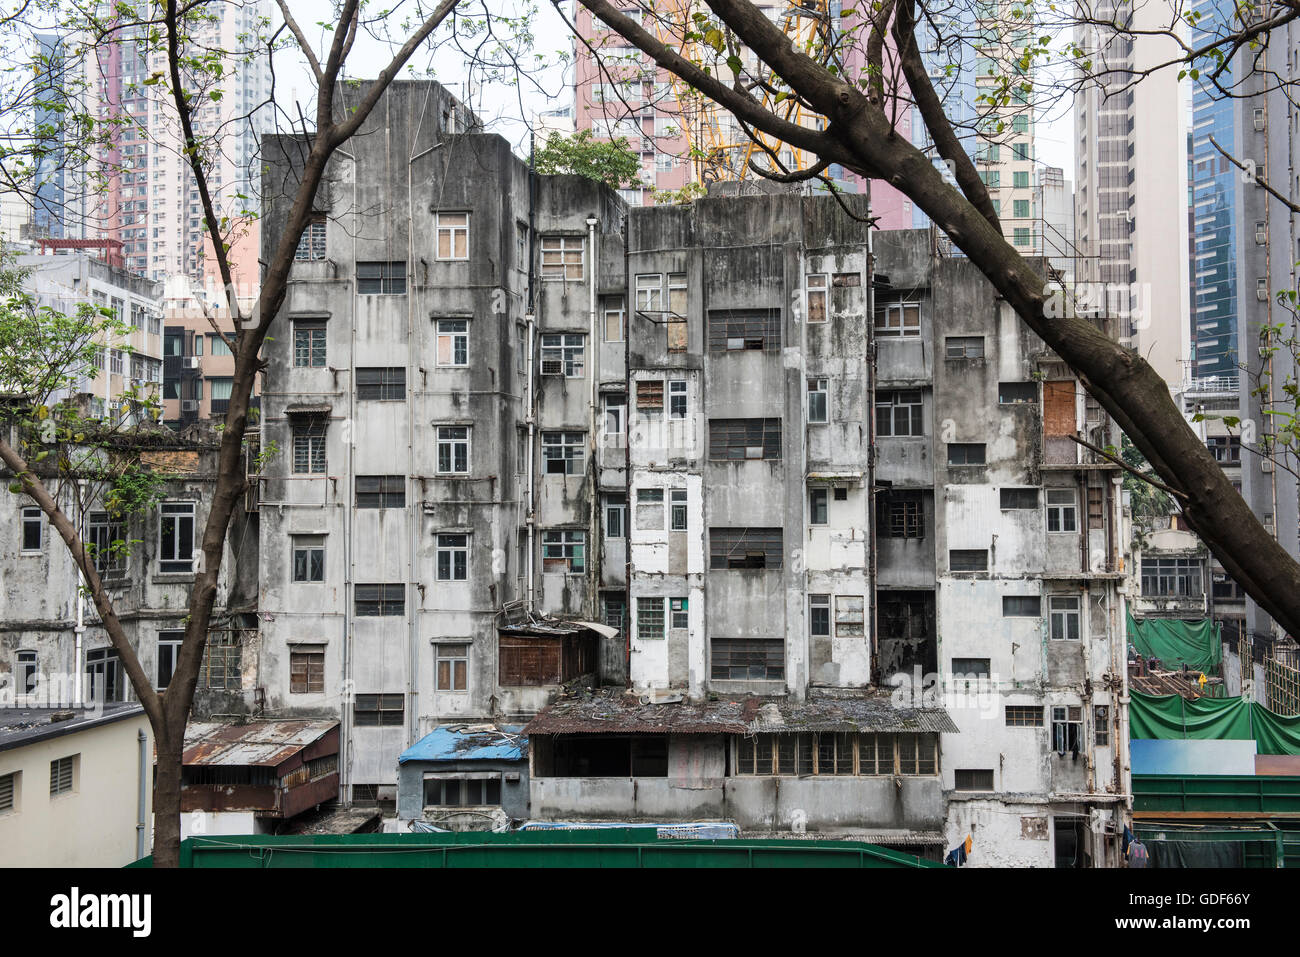 old-tenement-building-central-hong-kong-china-GDF66Y.jpg